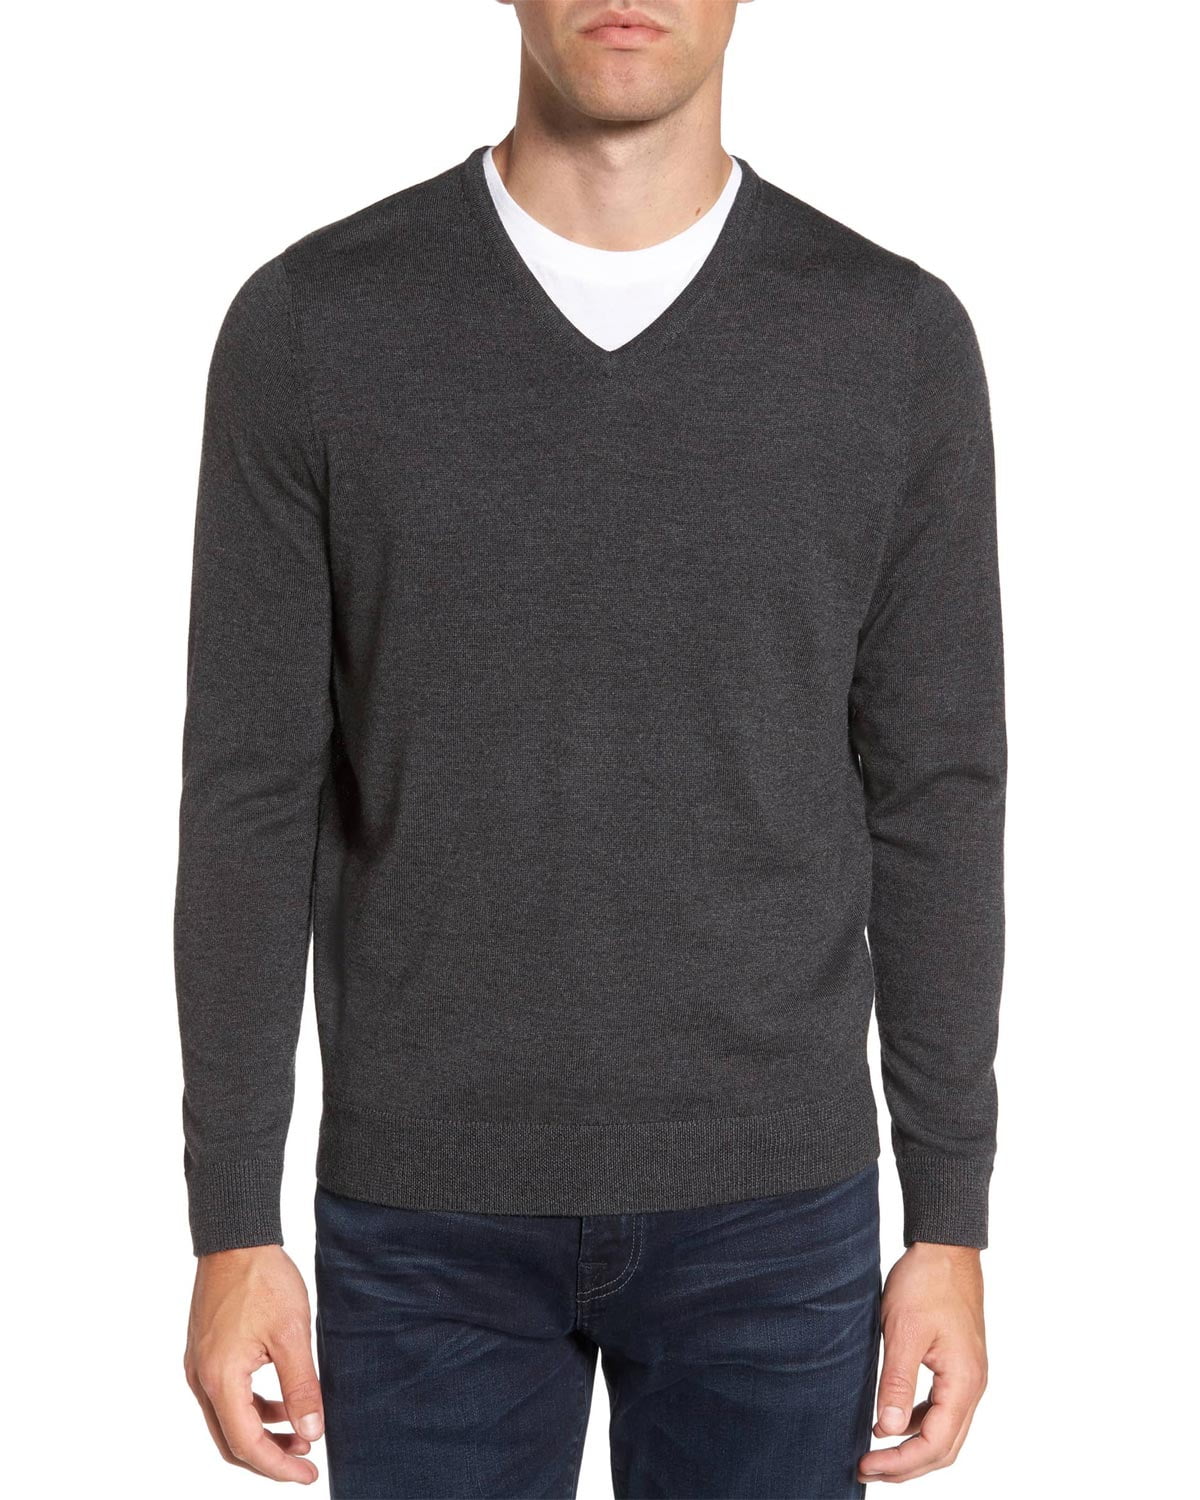 Bloomingdales Men's Merino Wool V-Neck Sweater Large L Dark Grey ...